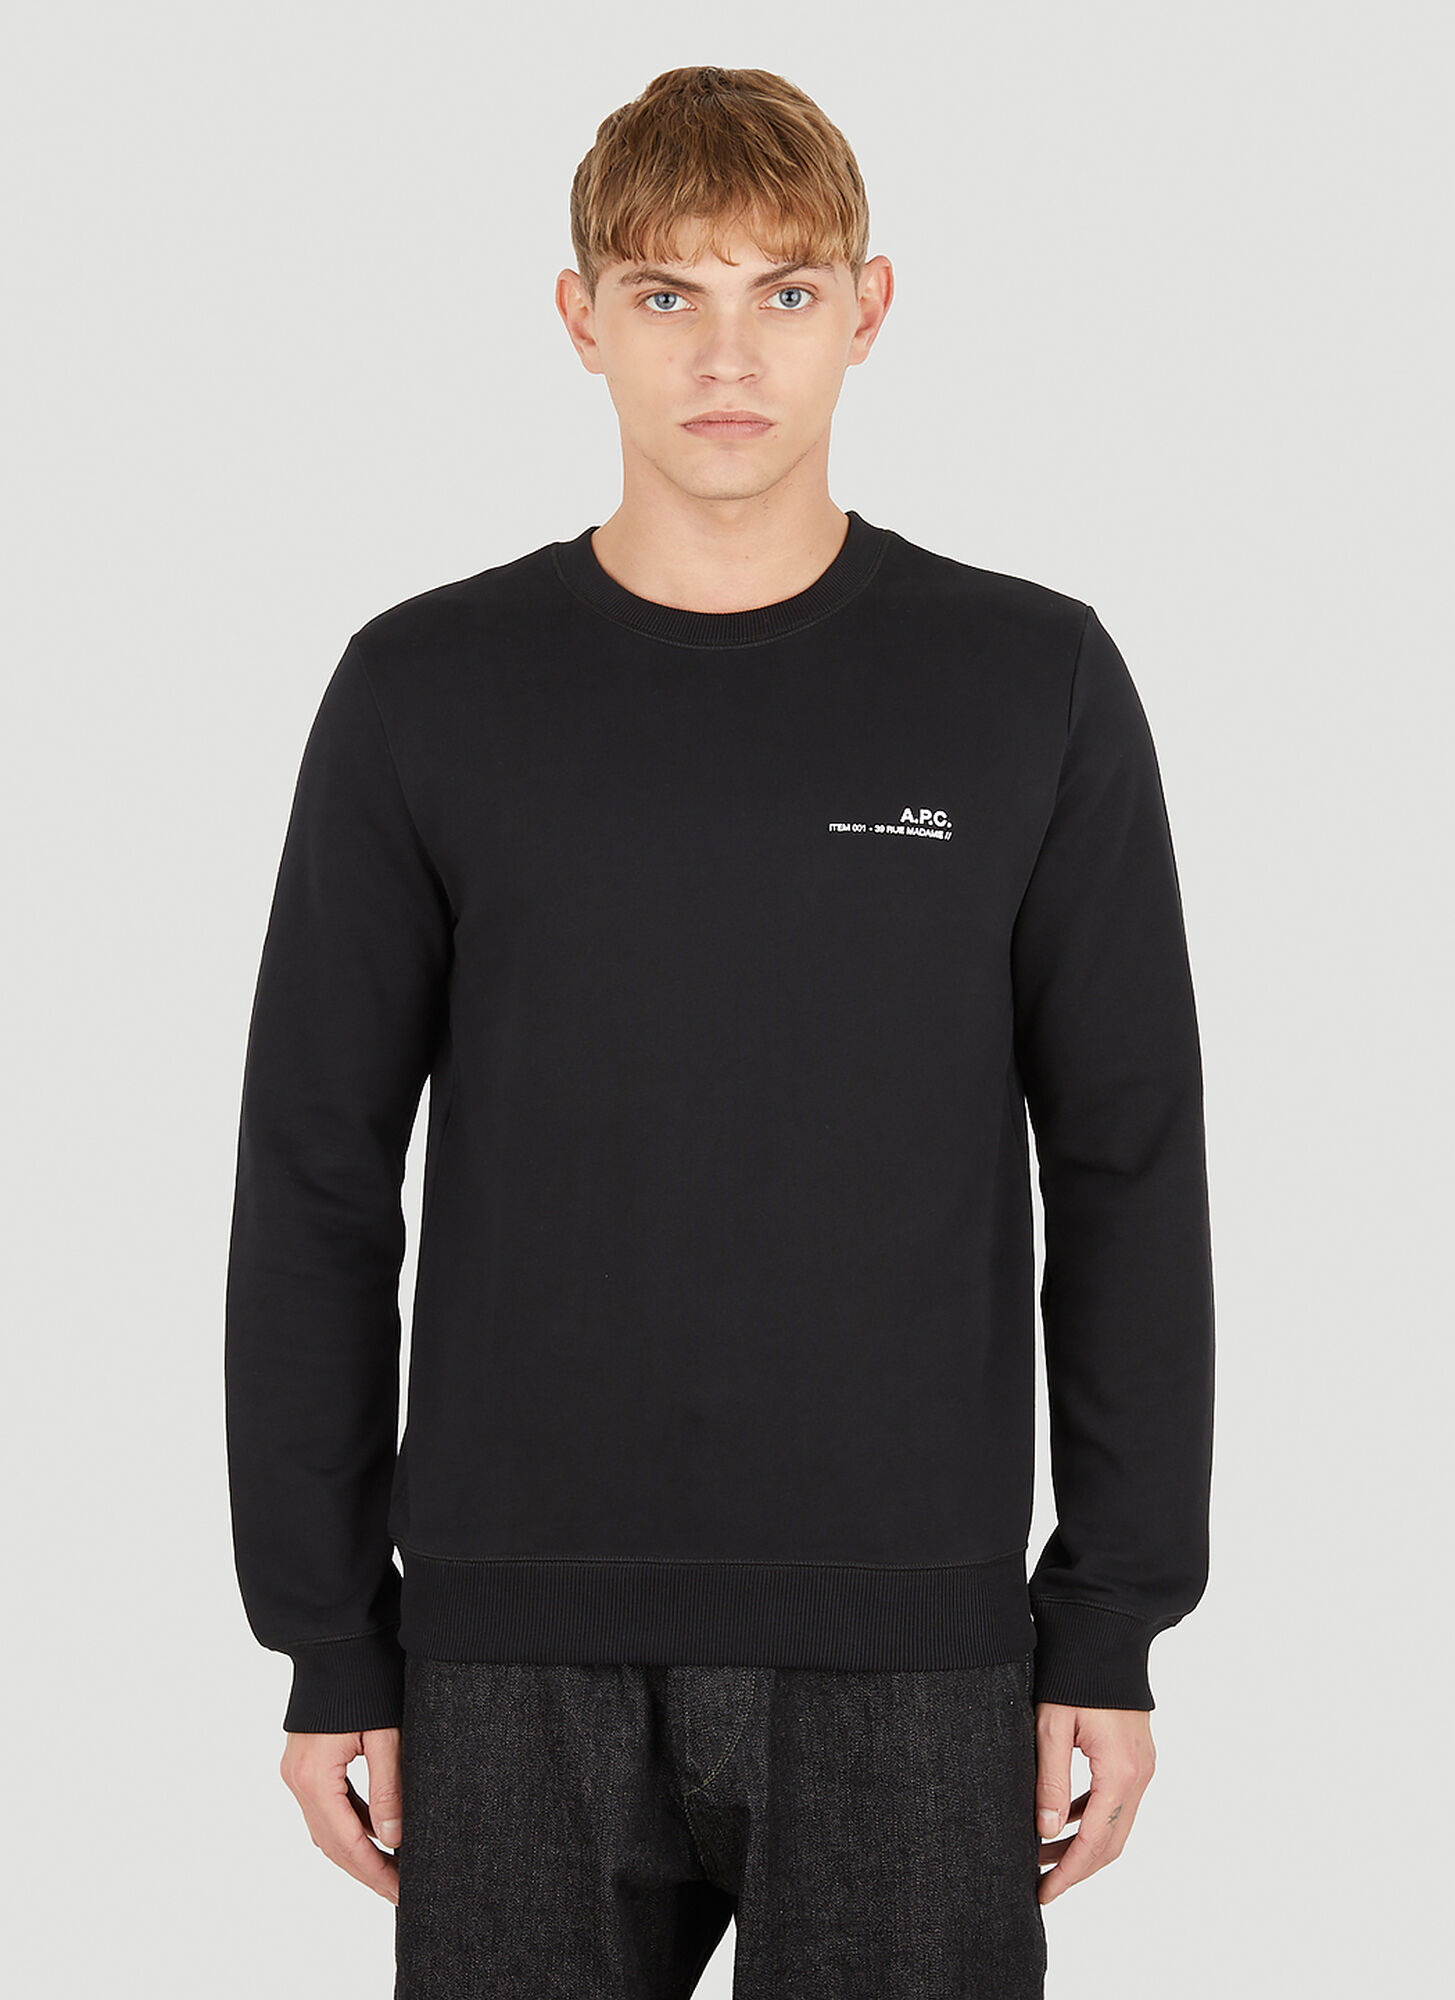 Apc A.p.c. Item 001 Long Sleeve T-shirt Male Black